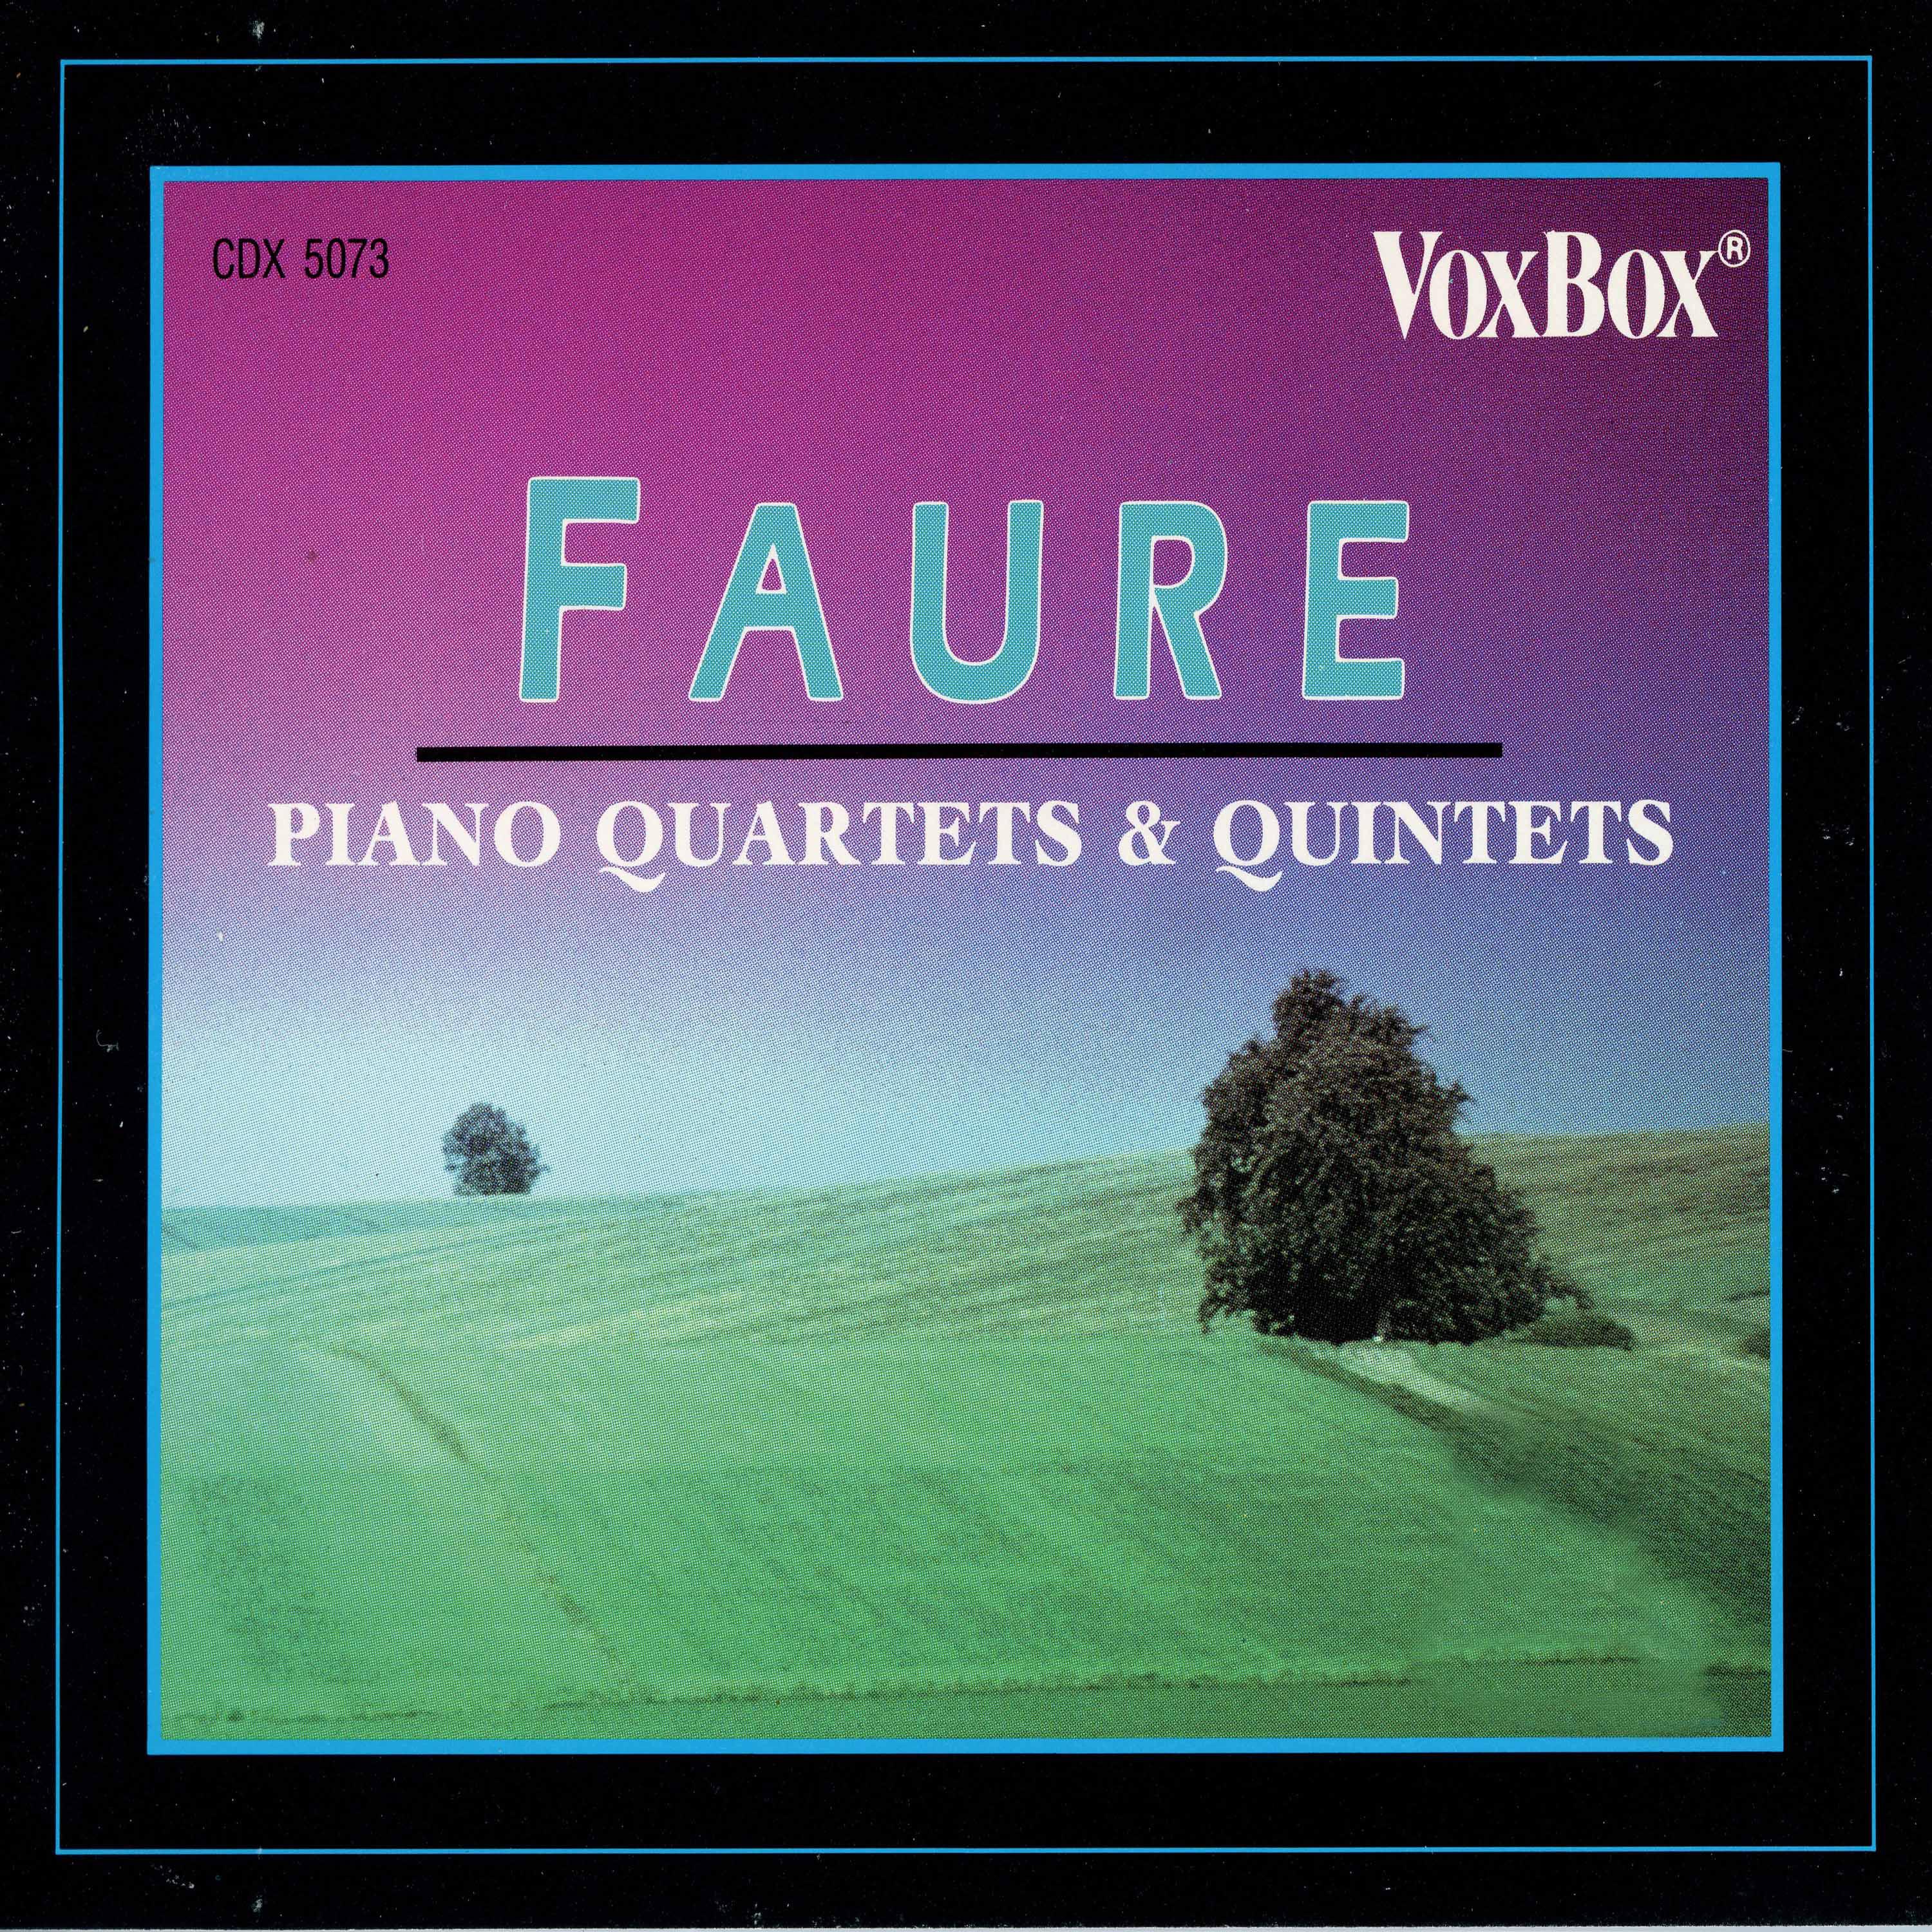 Gunter Kehr - Piano Quartet No. 2 in G Minor, Op. 45:Piano Quartet No. 2 in G Minor, Op. 45: I. Allegro molto moderato